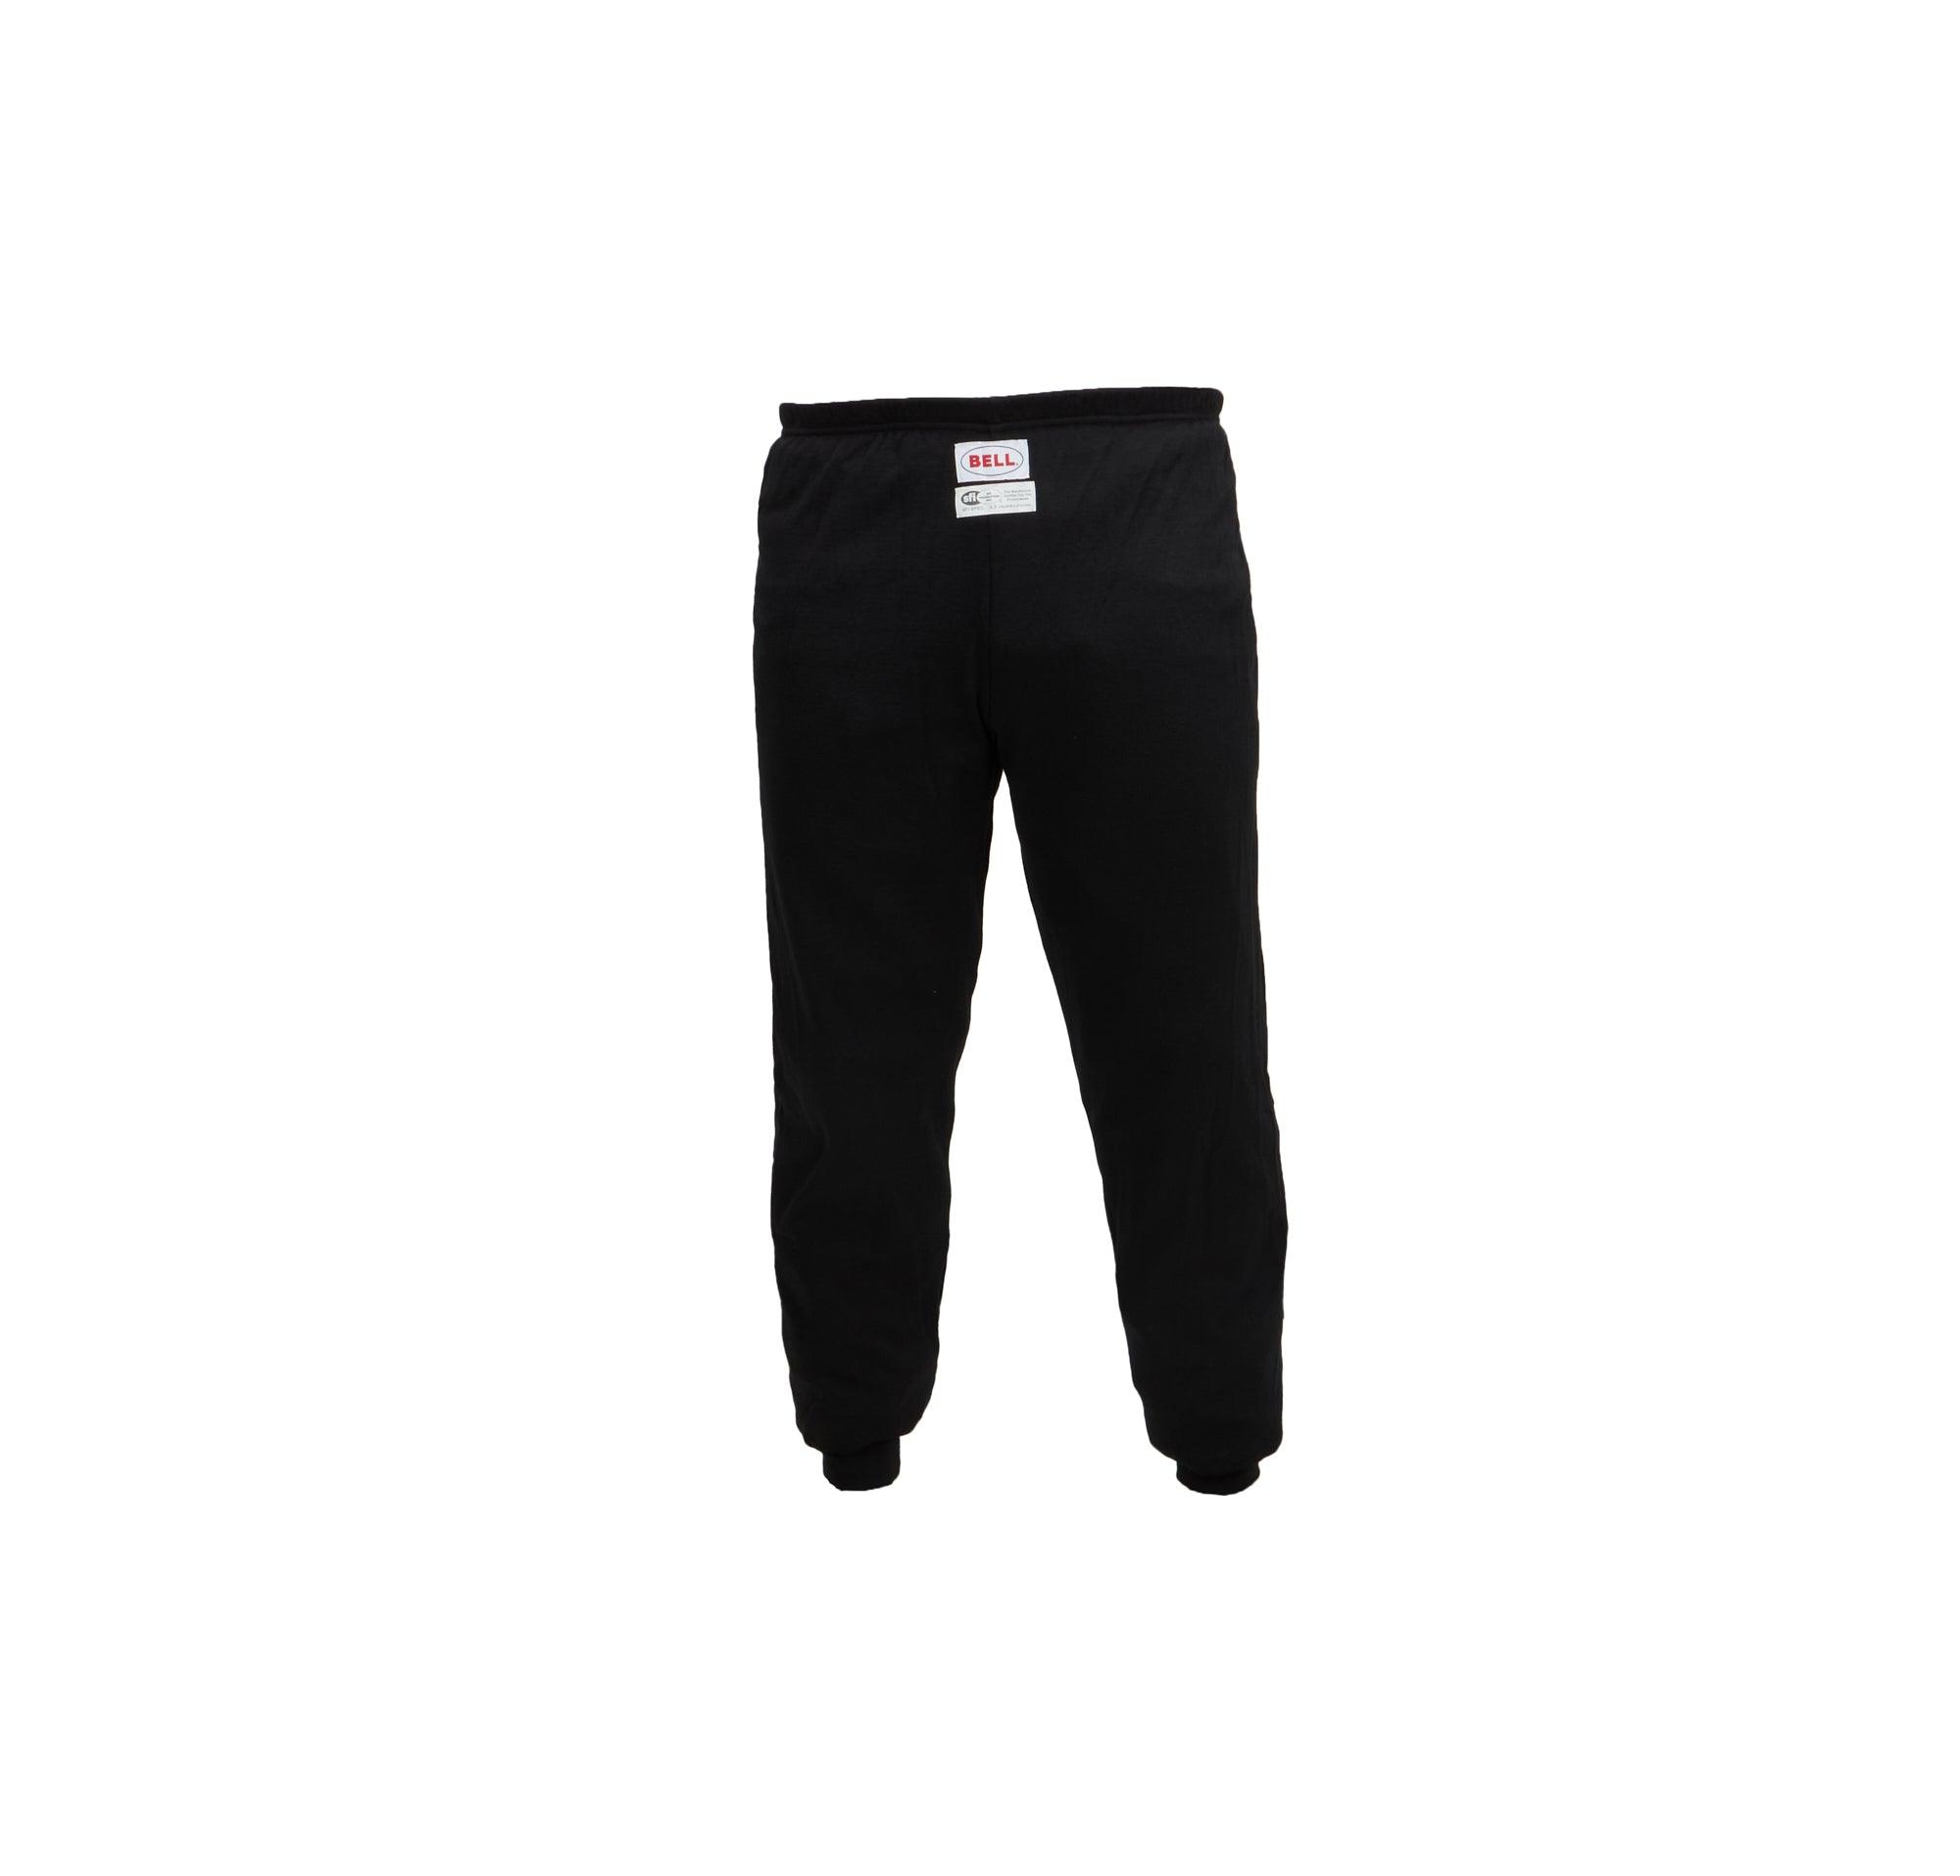 Underwear Bottom SPORT- TX Black Small SFI 3.3/5 - Burlile Performance Products